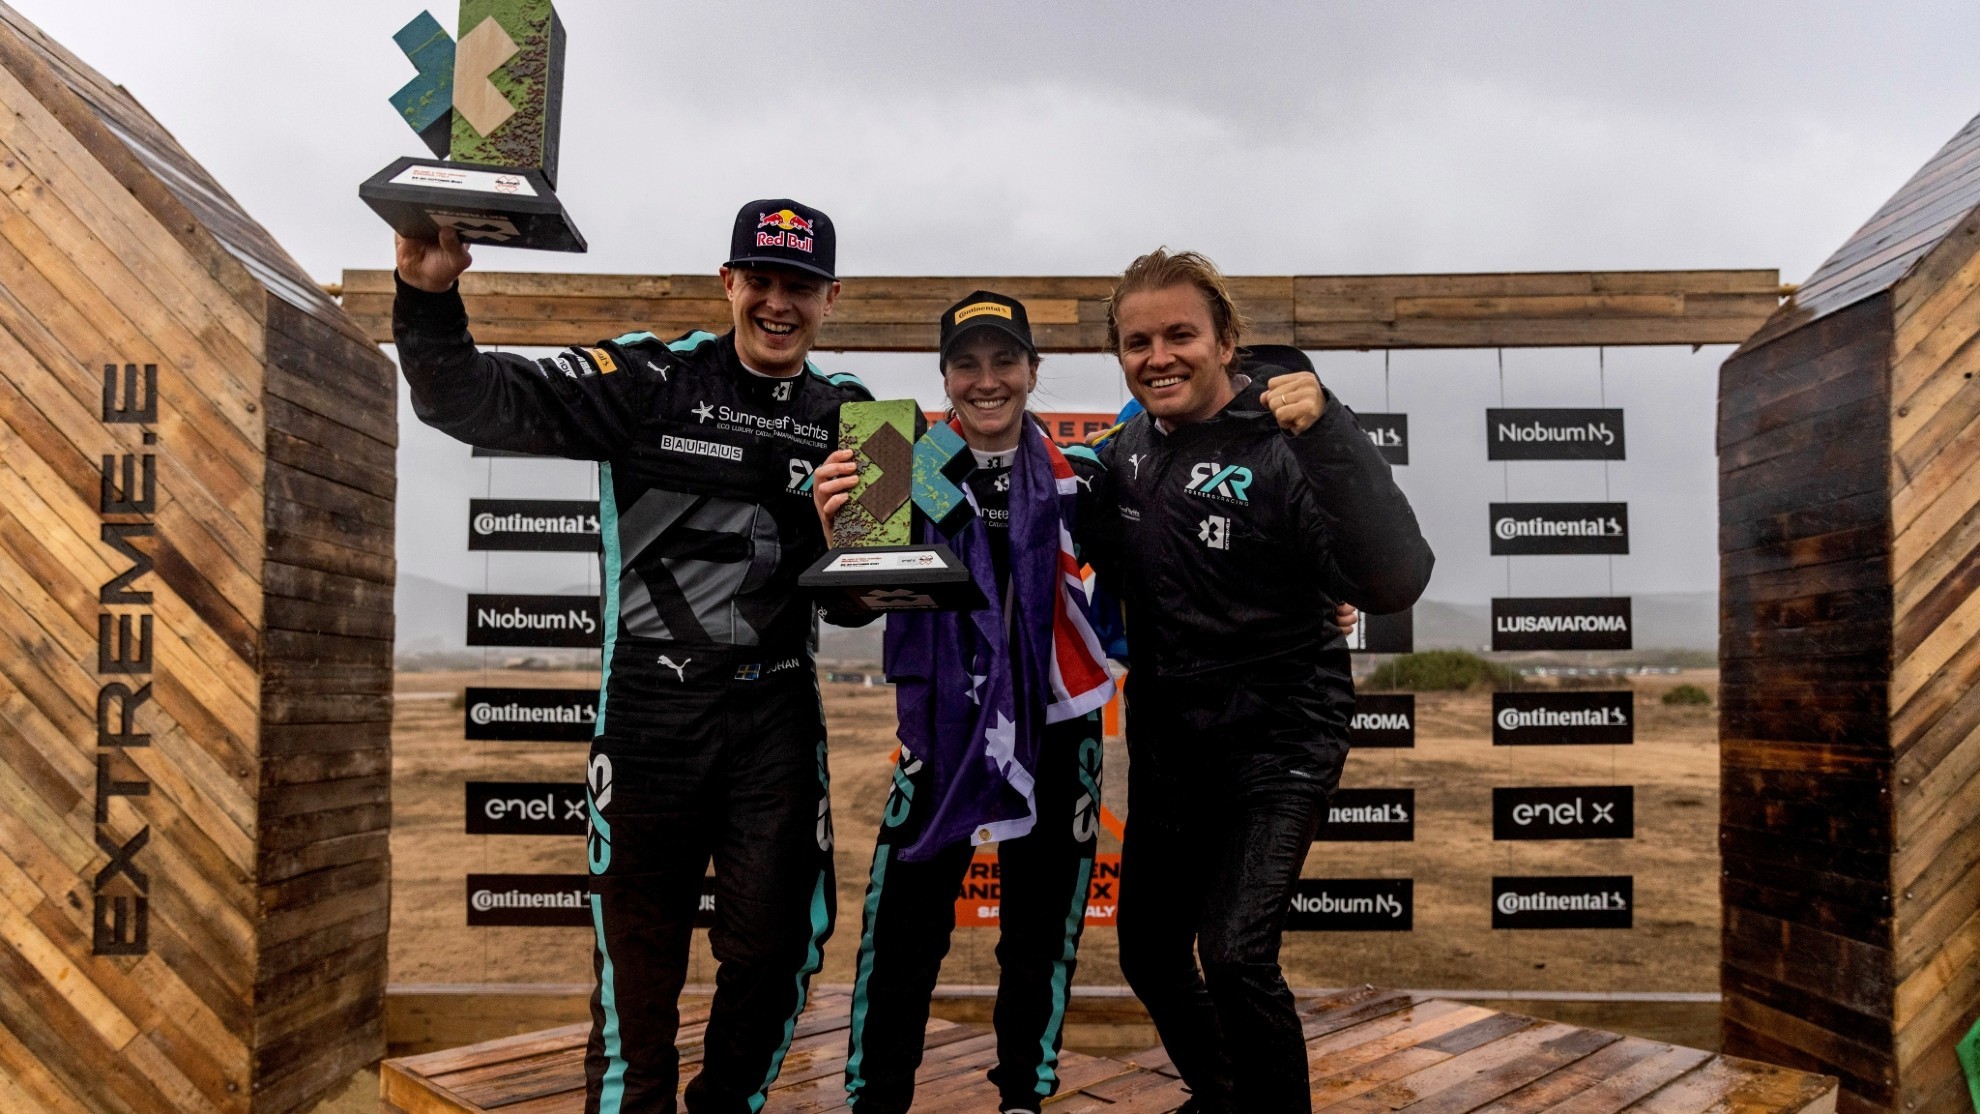 Extreme E - Jurassic XPrix - campeones - Rosberg RXR - Molly Taylor - Johan Kristofferson - Hamilton